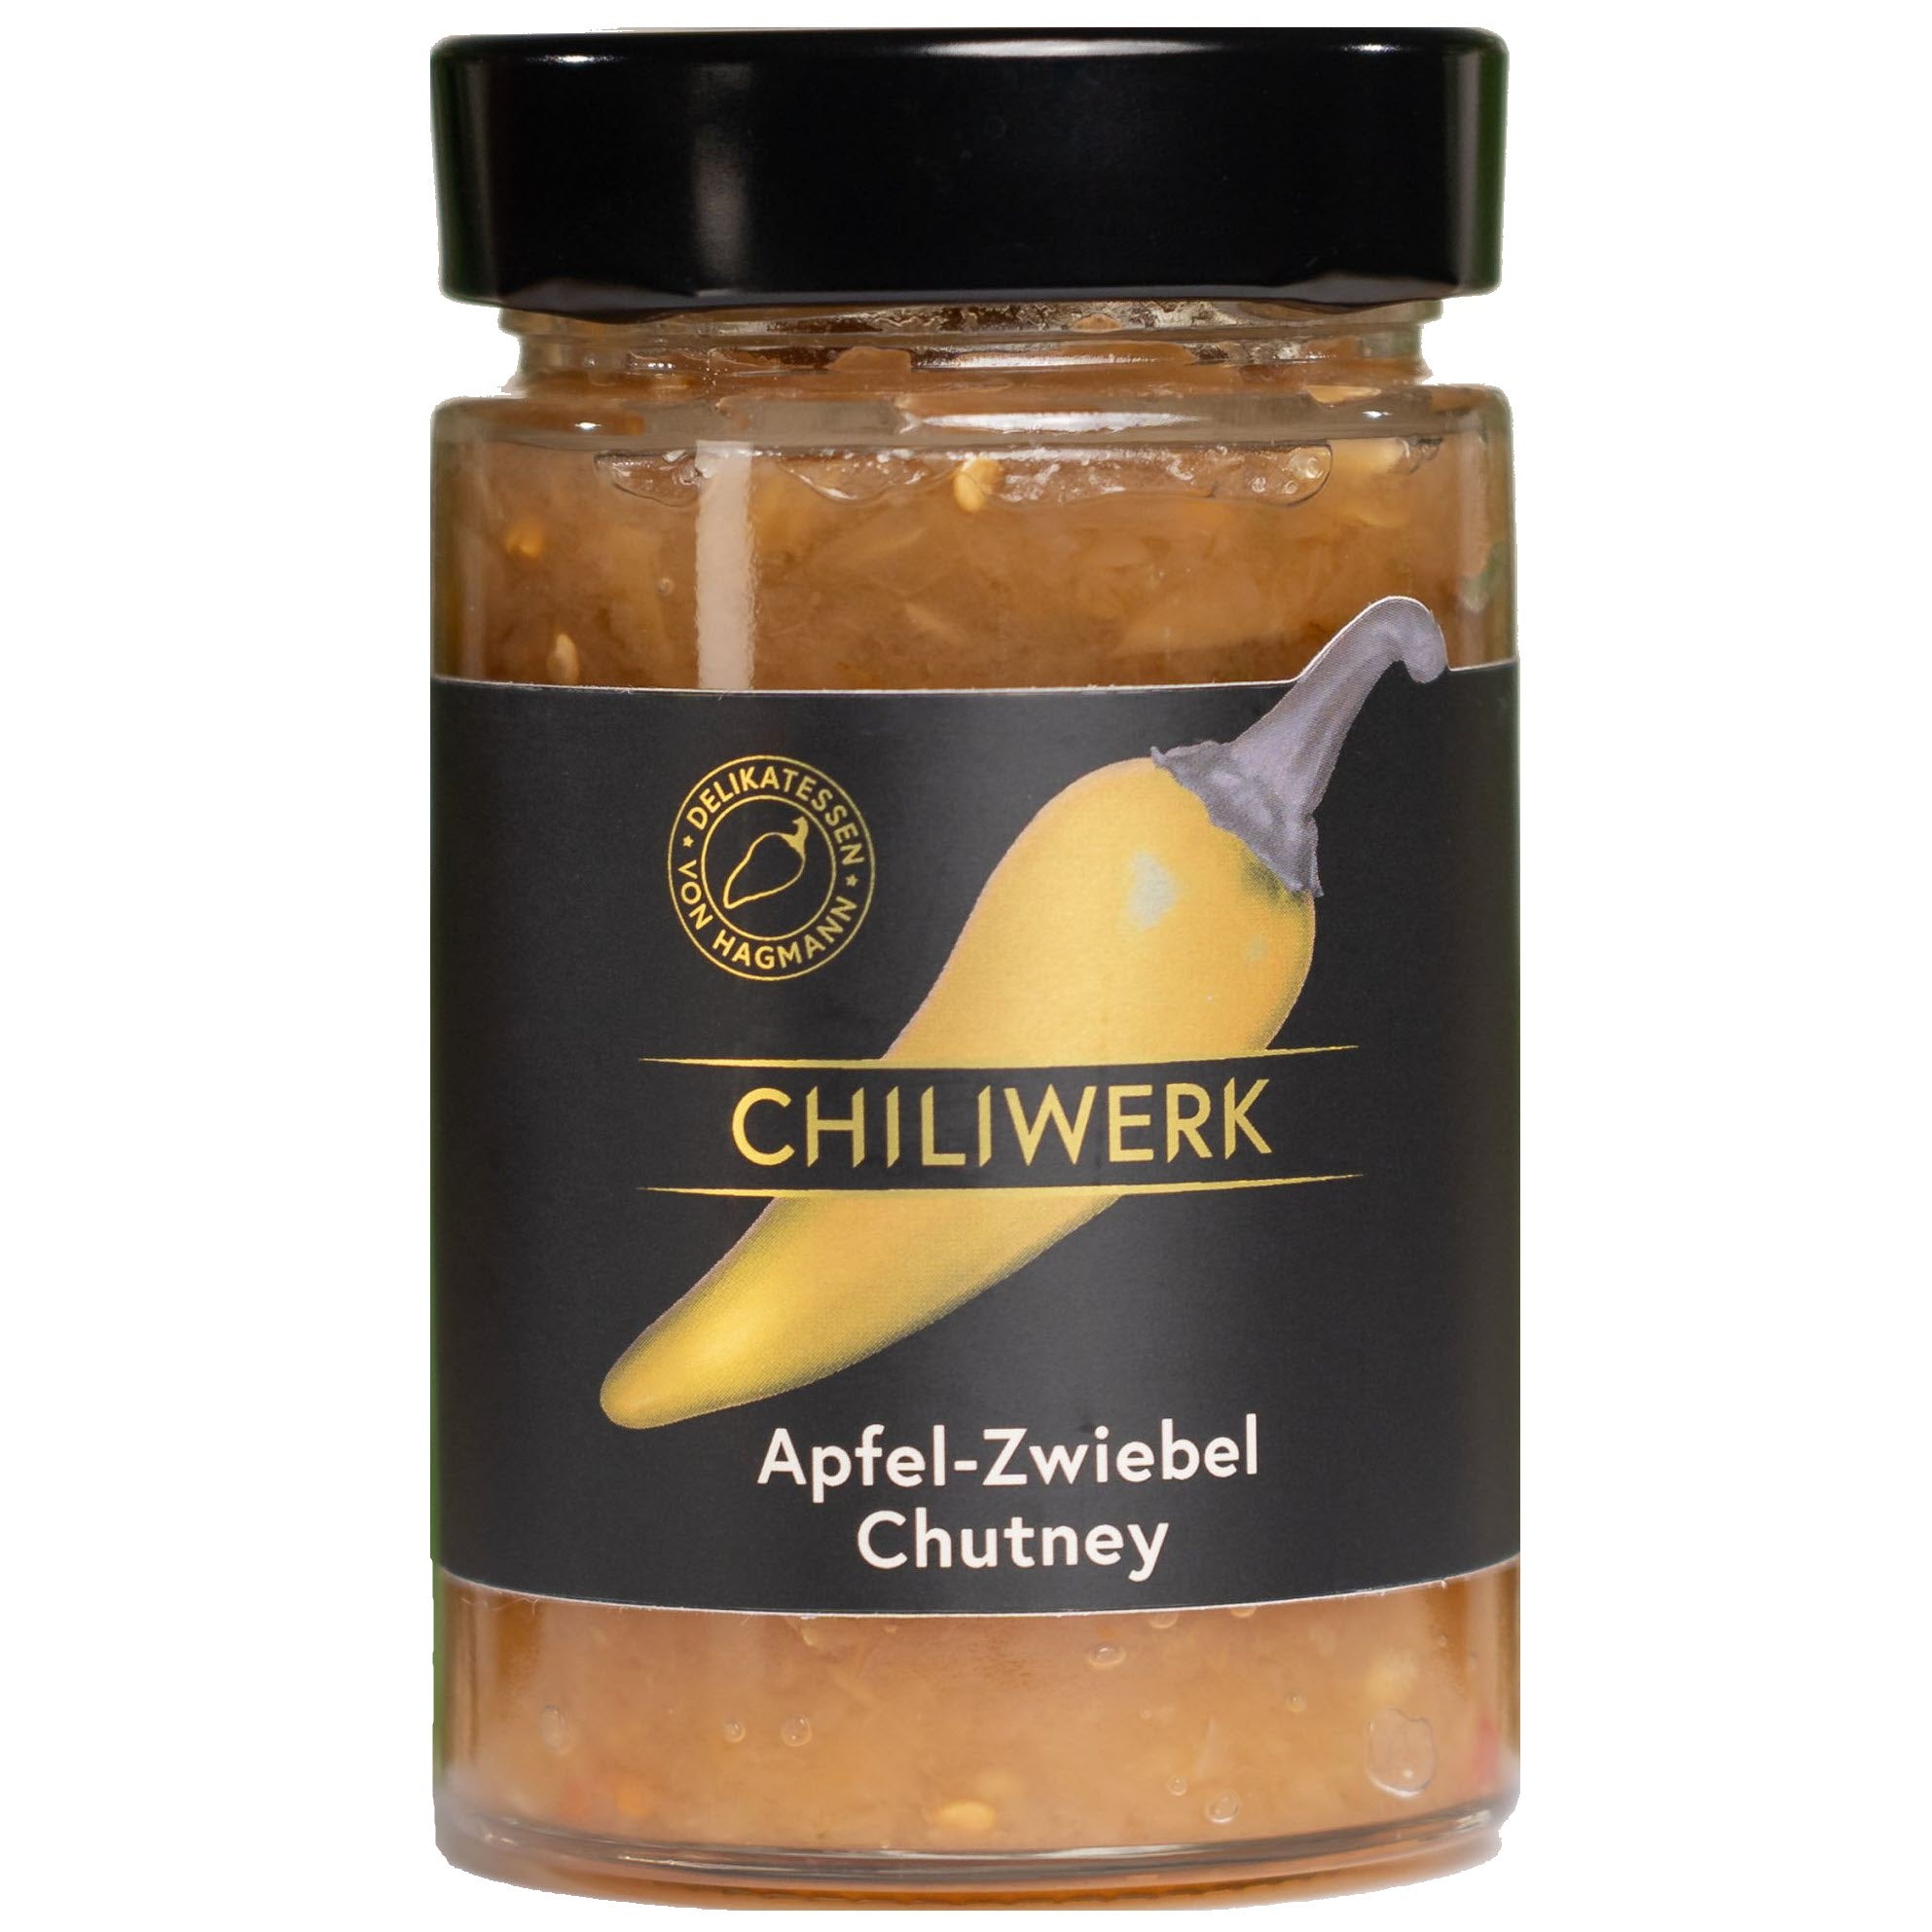 Image of Apfel-Zwiebel Chutney - 200g